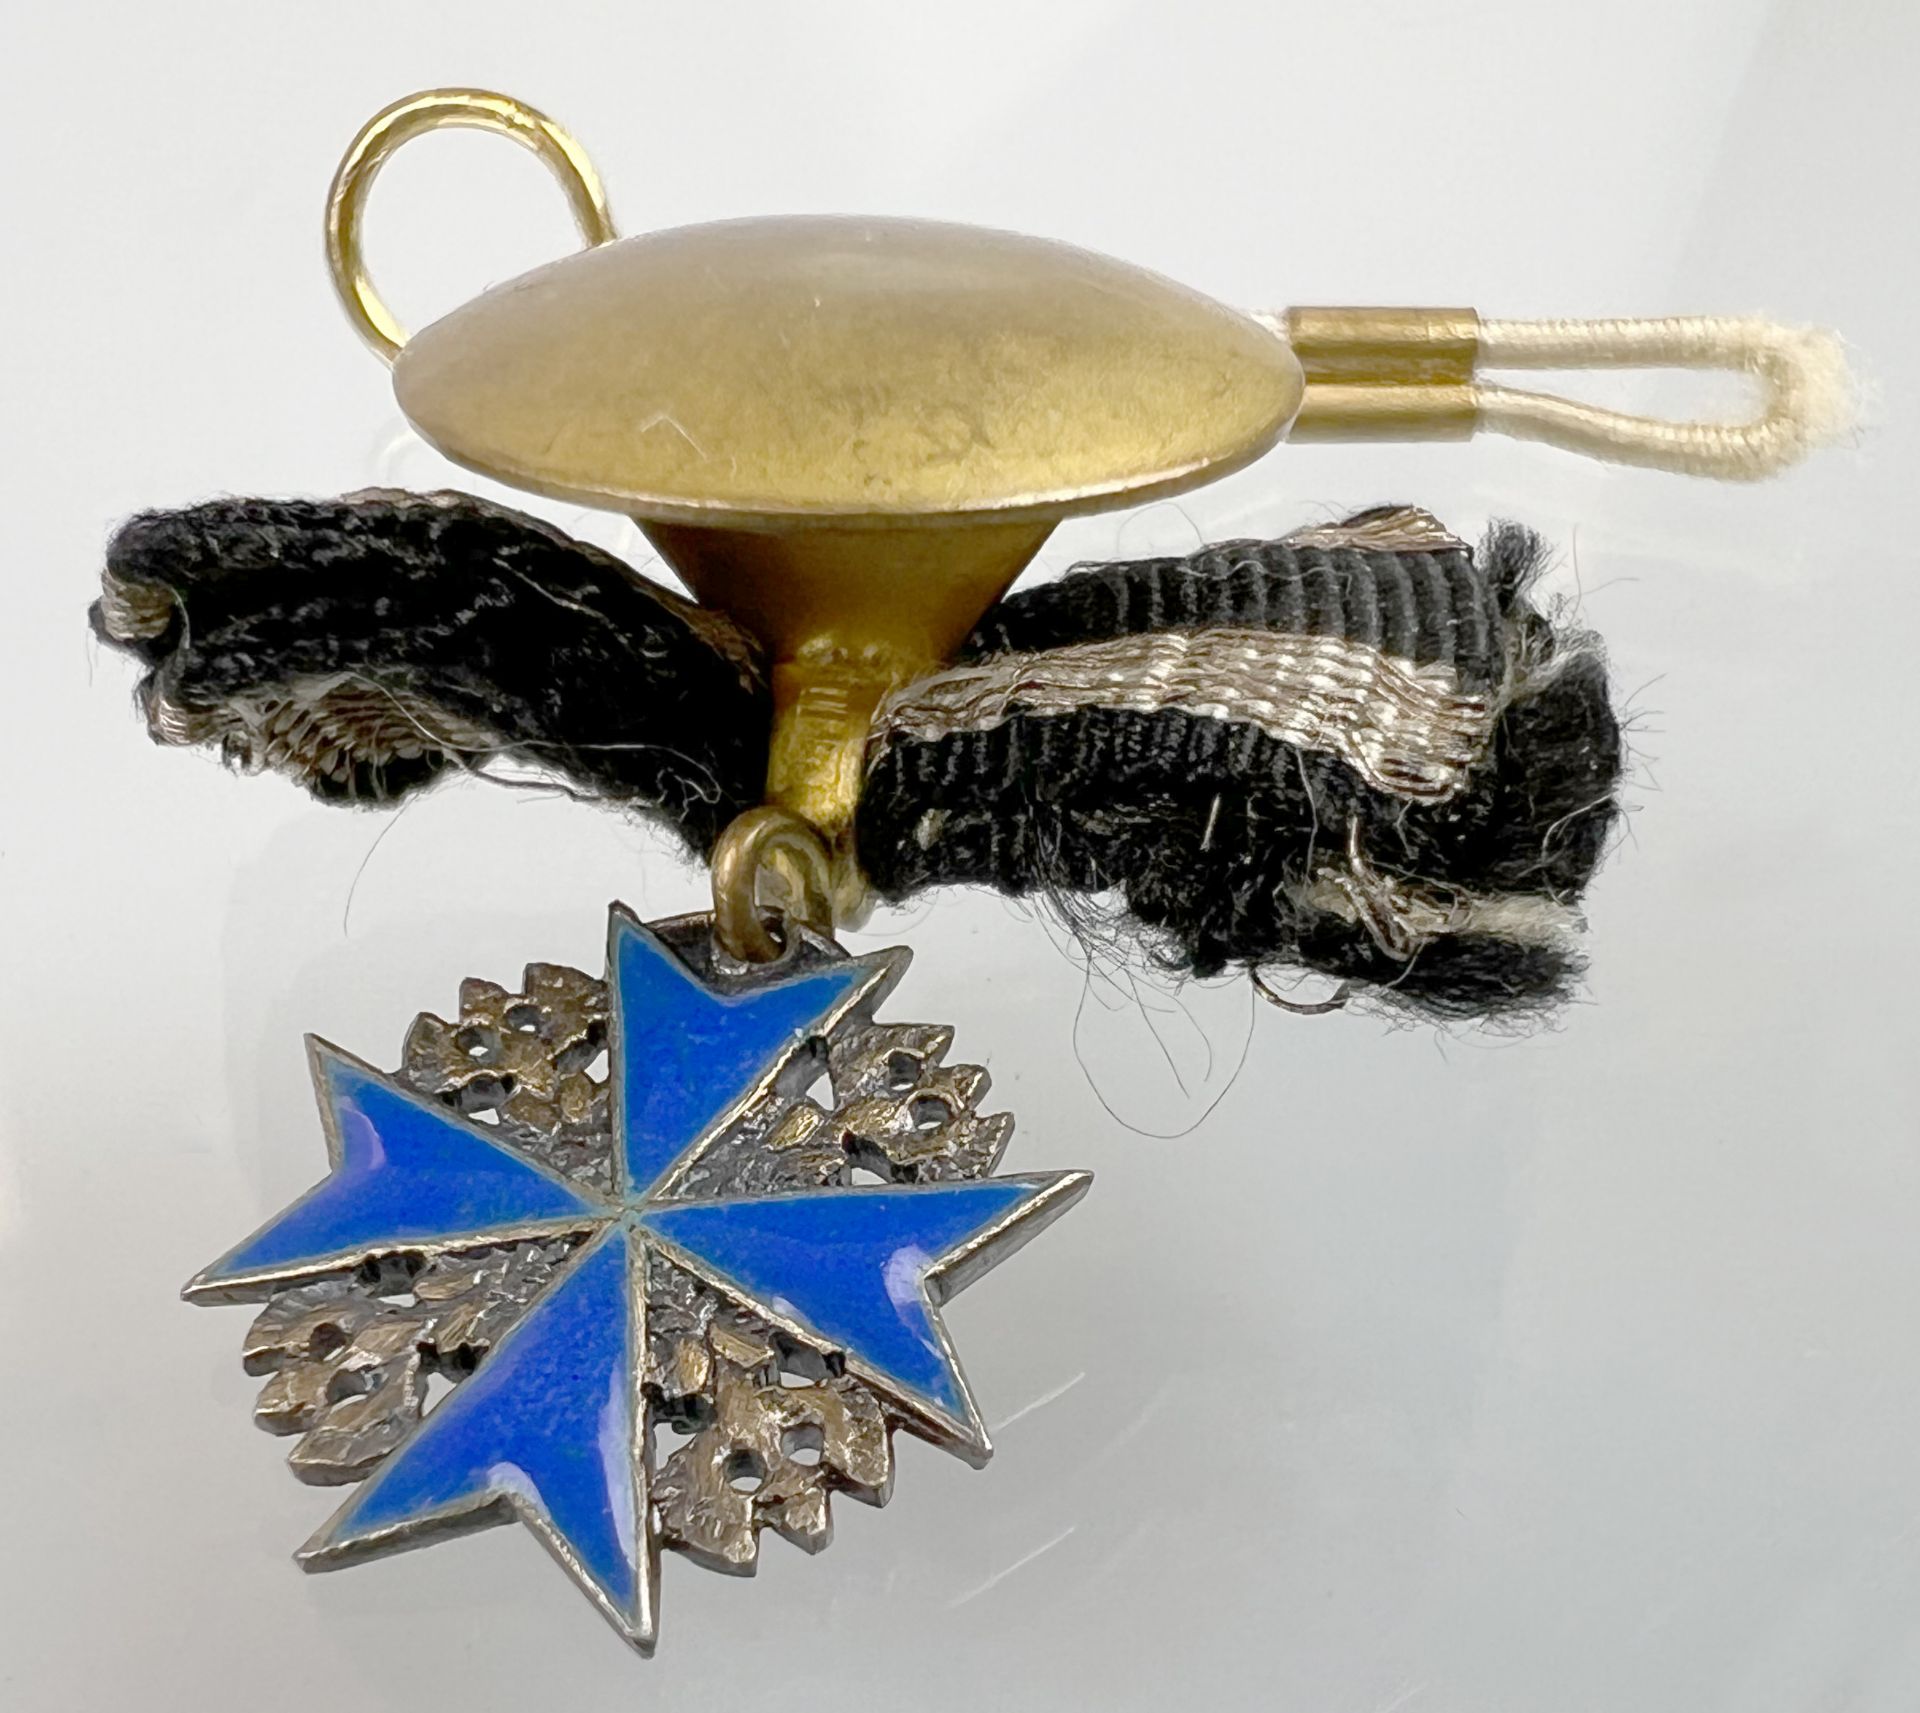 Miniatur "Pour Le Merite" für Militärverdienste. Preußen. - Image 3 of 4